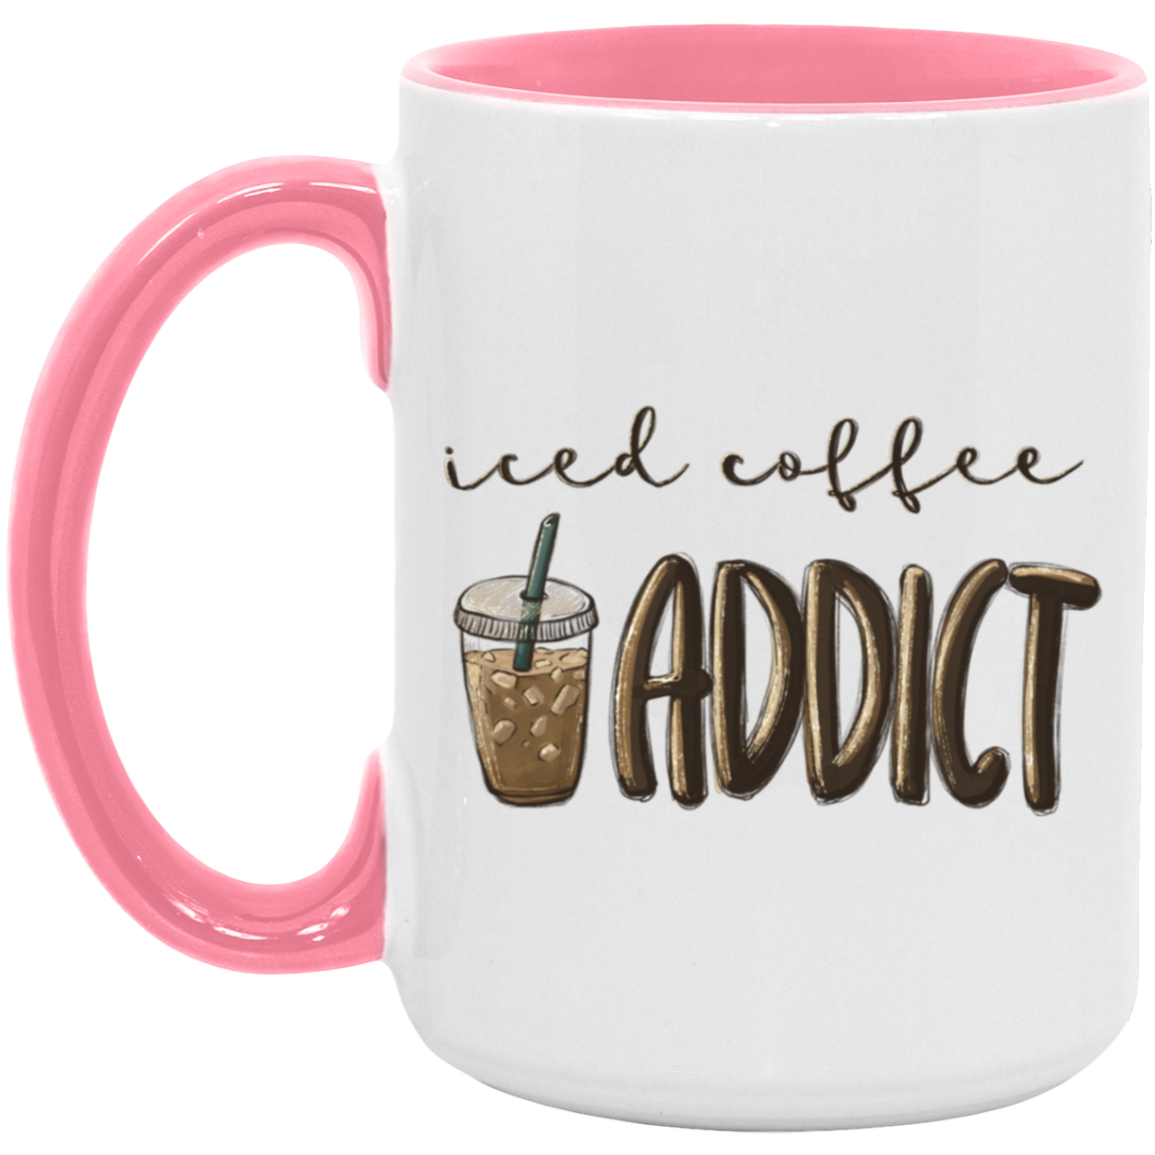 Iced Coffee Addict 15 oz Coffee Mug